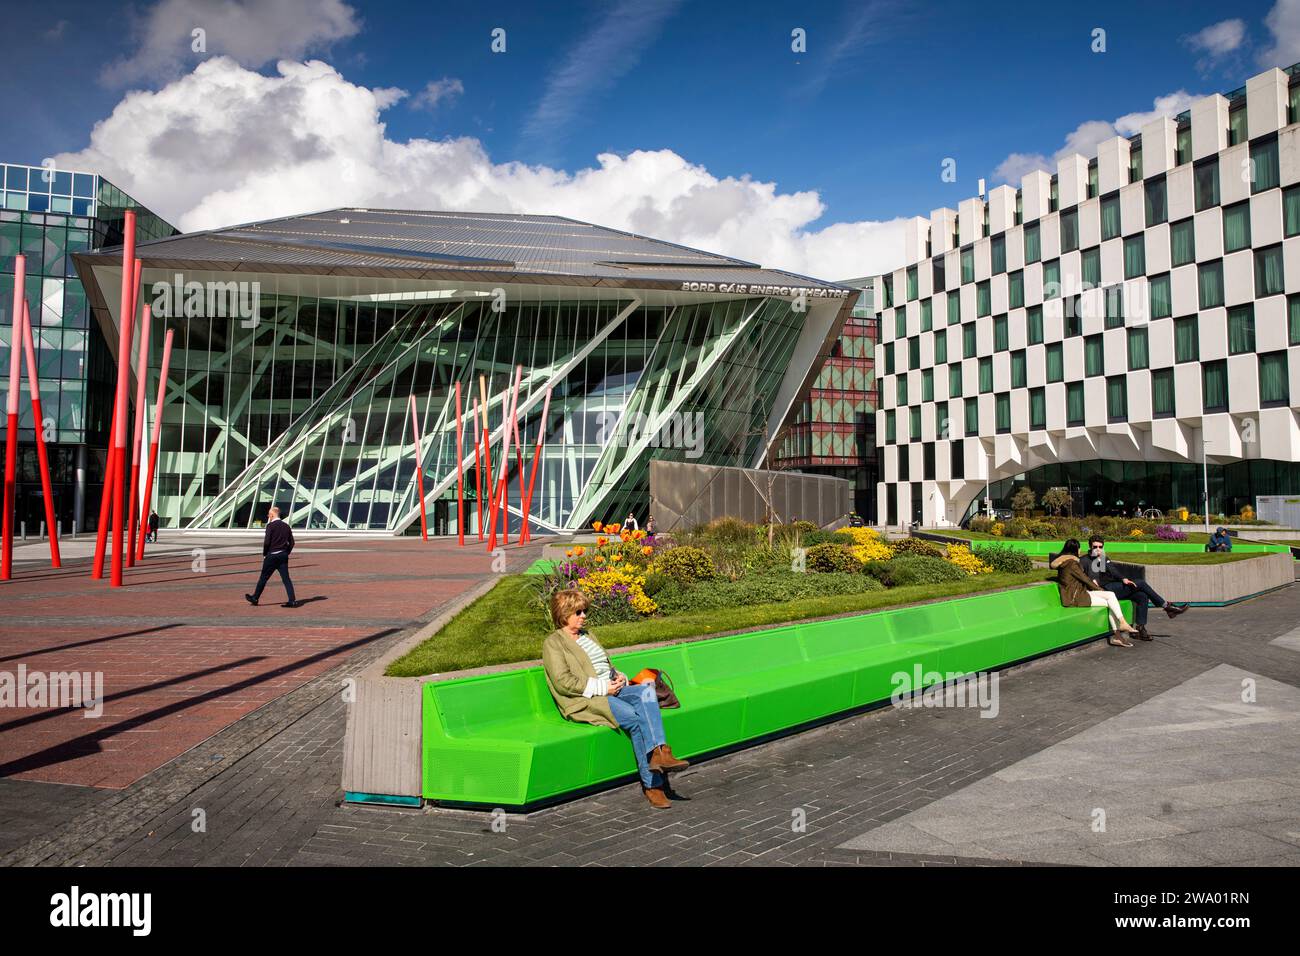 Ireland, Dublin, Grand Canal Square, Bord Gais Energy Theatre Stock Photo